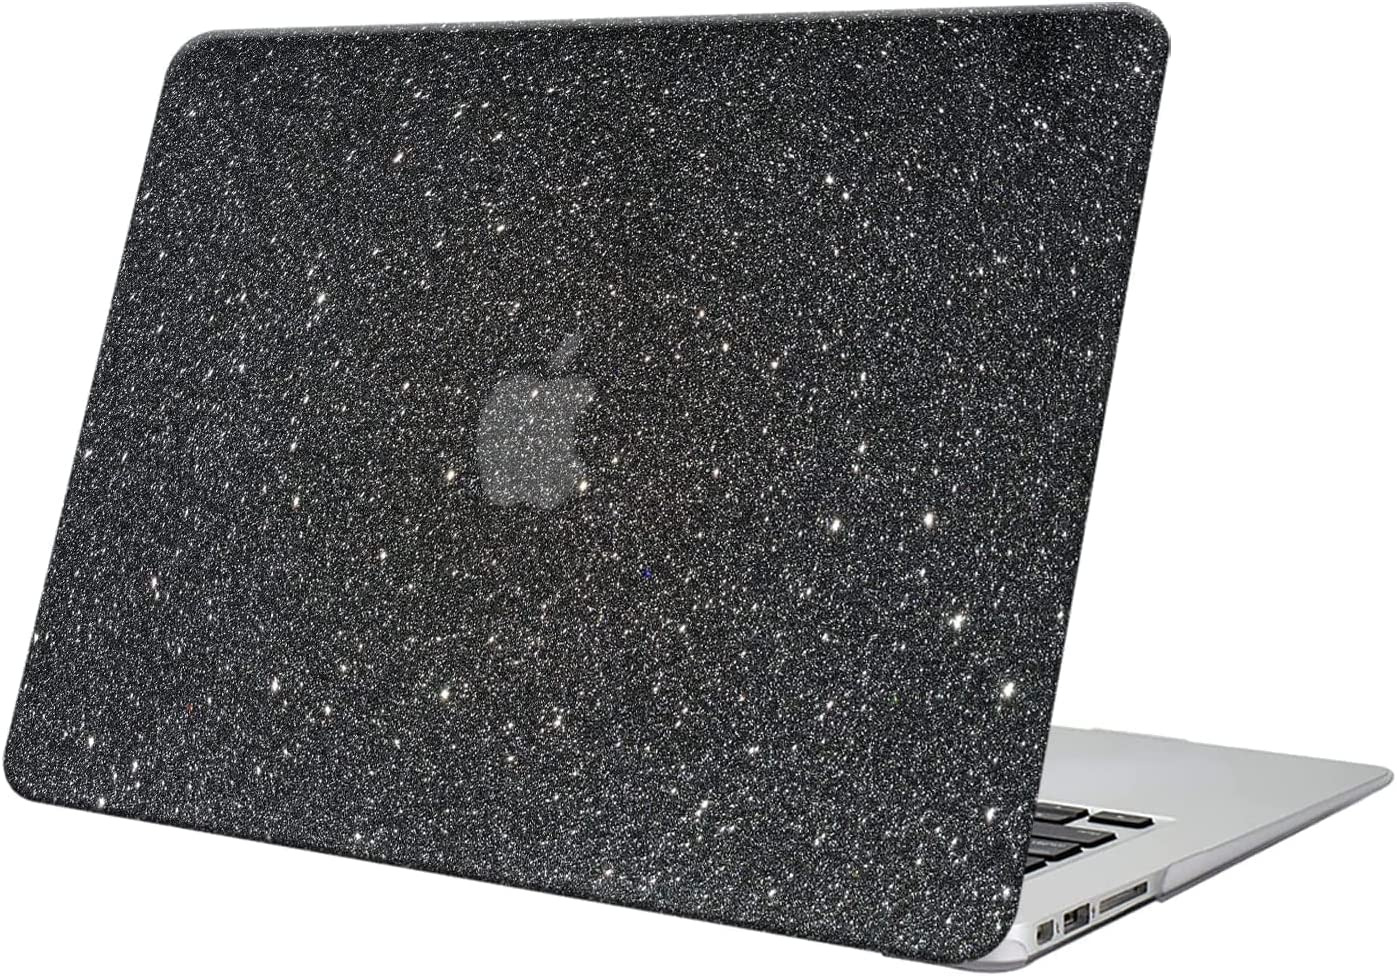 Funut Laptop Case for Macbook Pro 15 Inch 2019-2016 Release A1990 A1707, Rubber